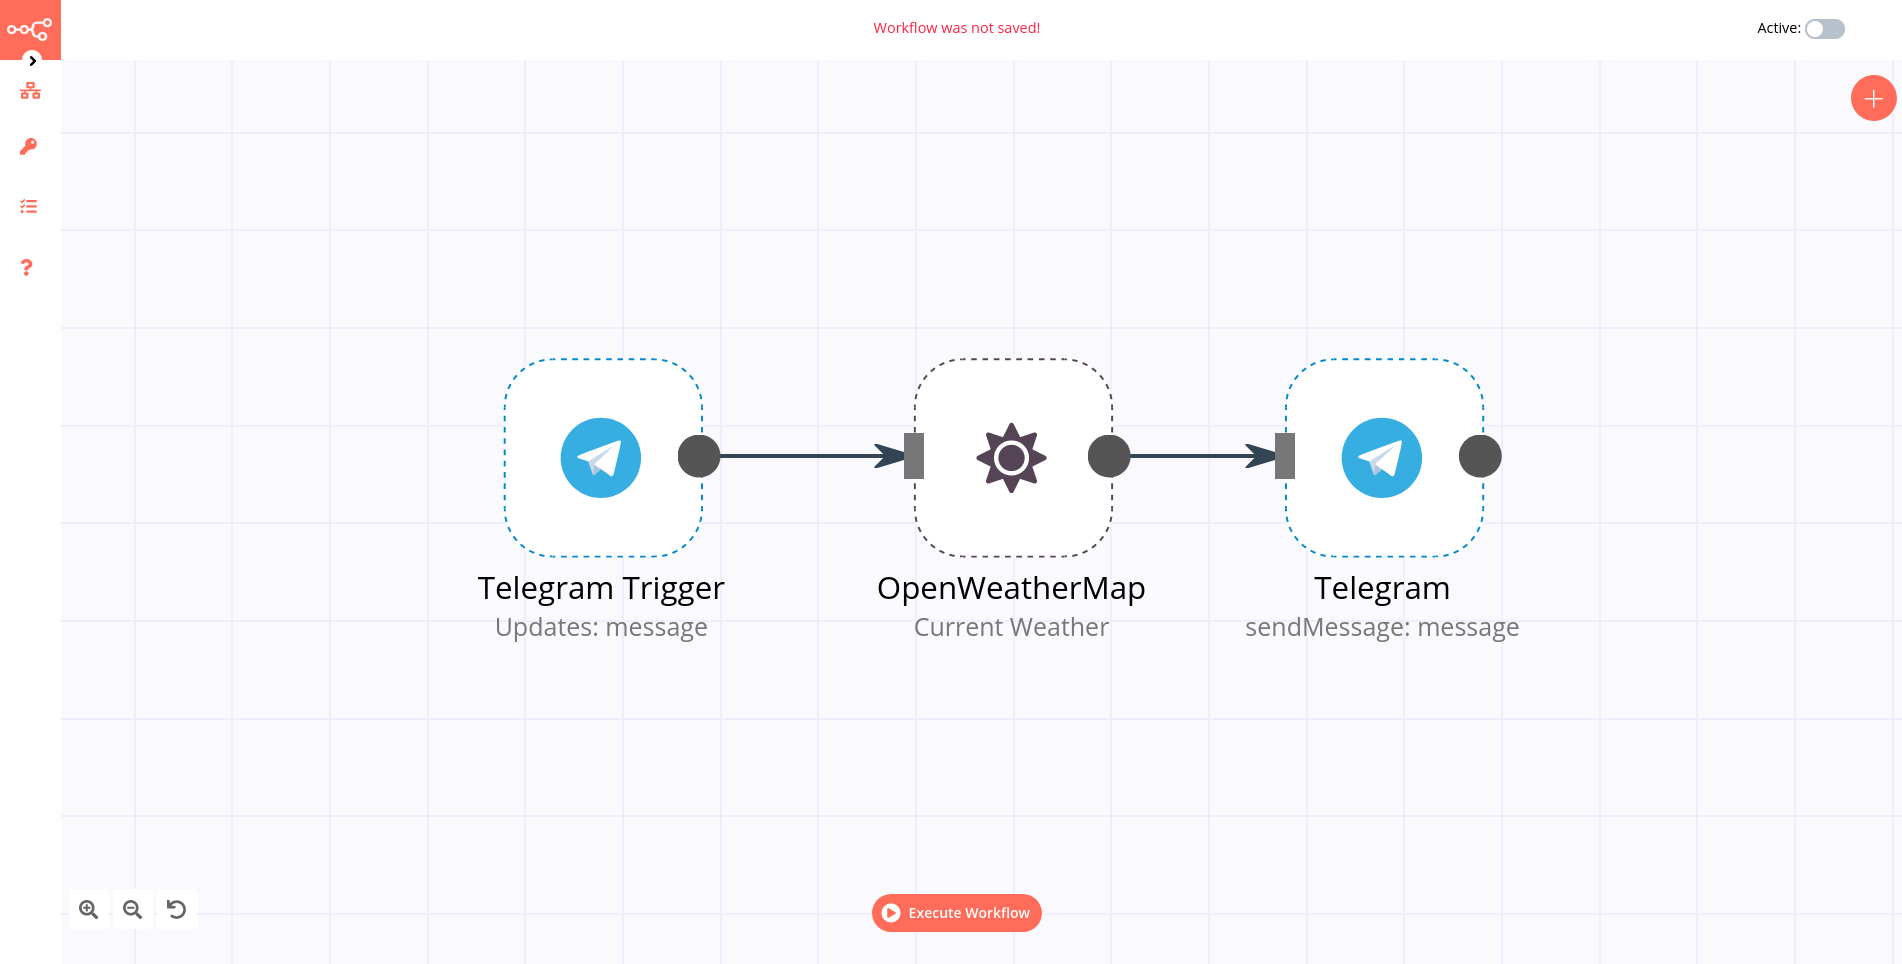 Telegram trigger